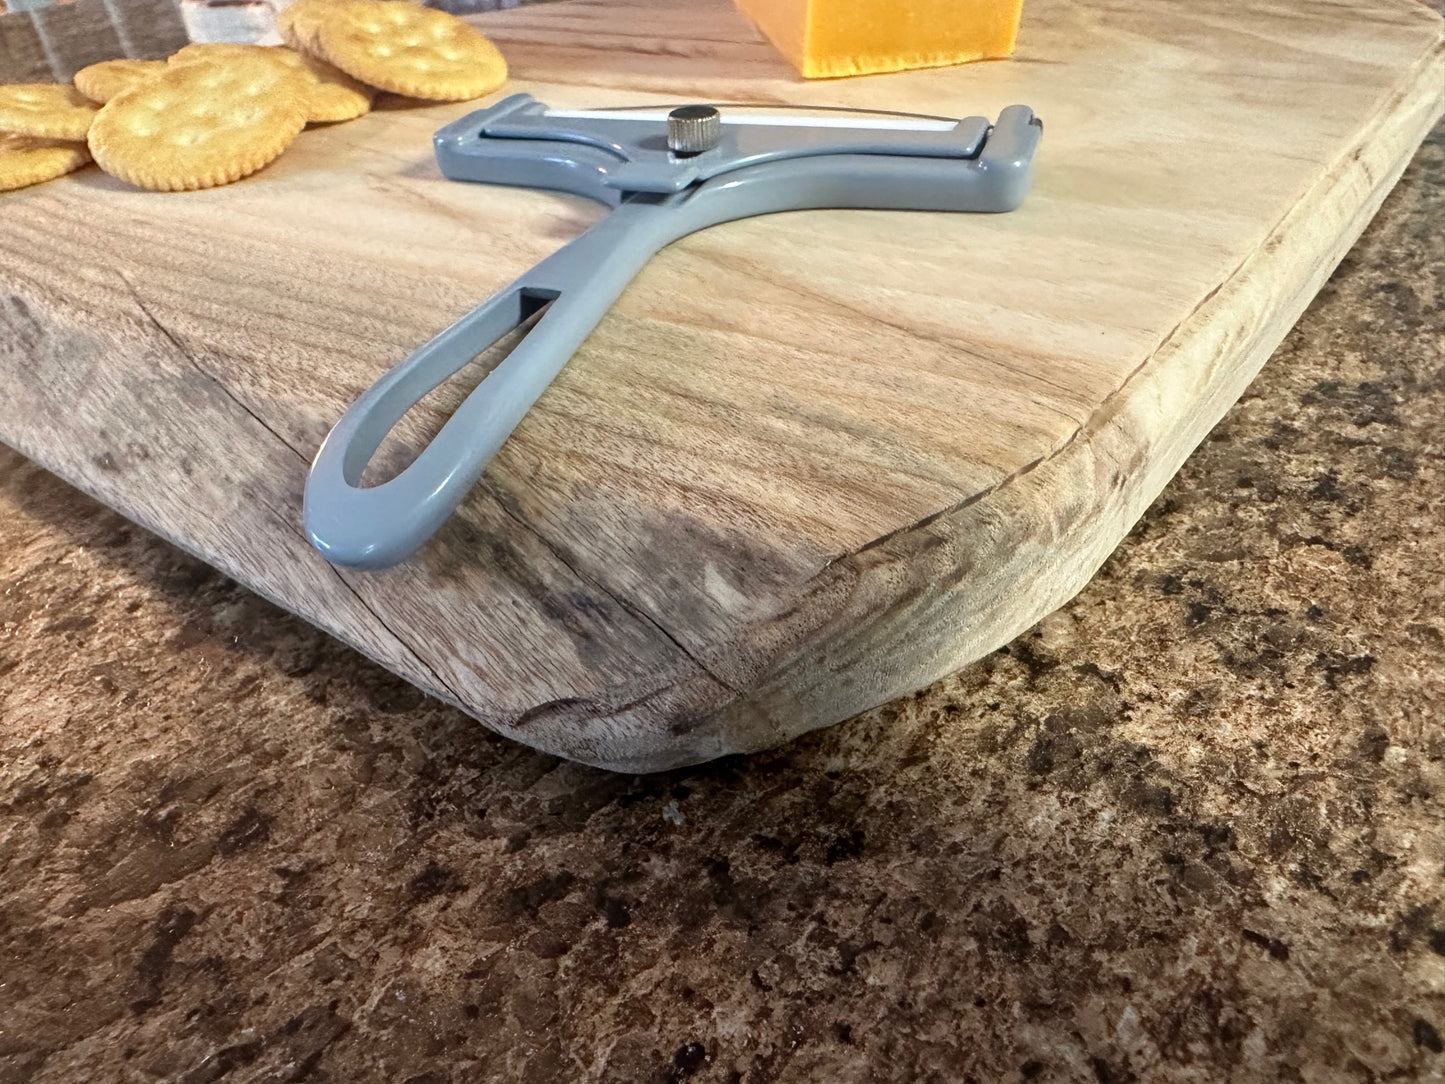 Oak Wood Cutting Board